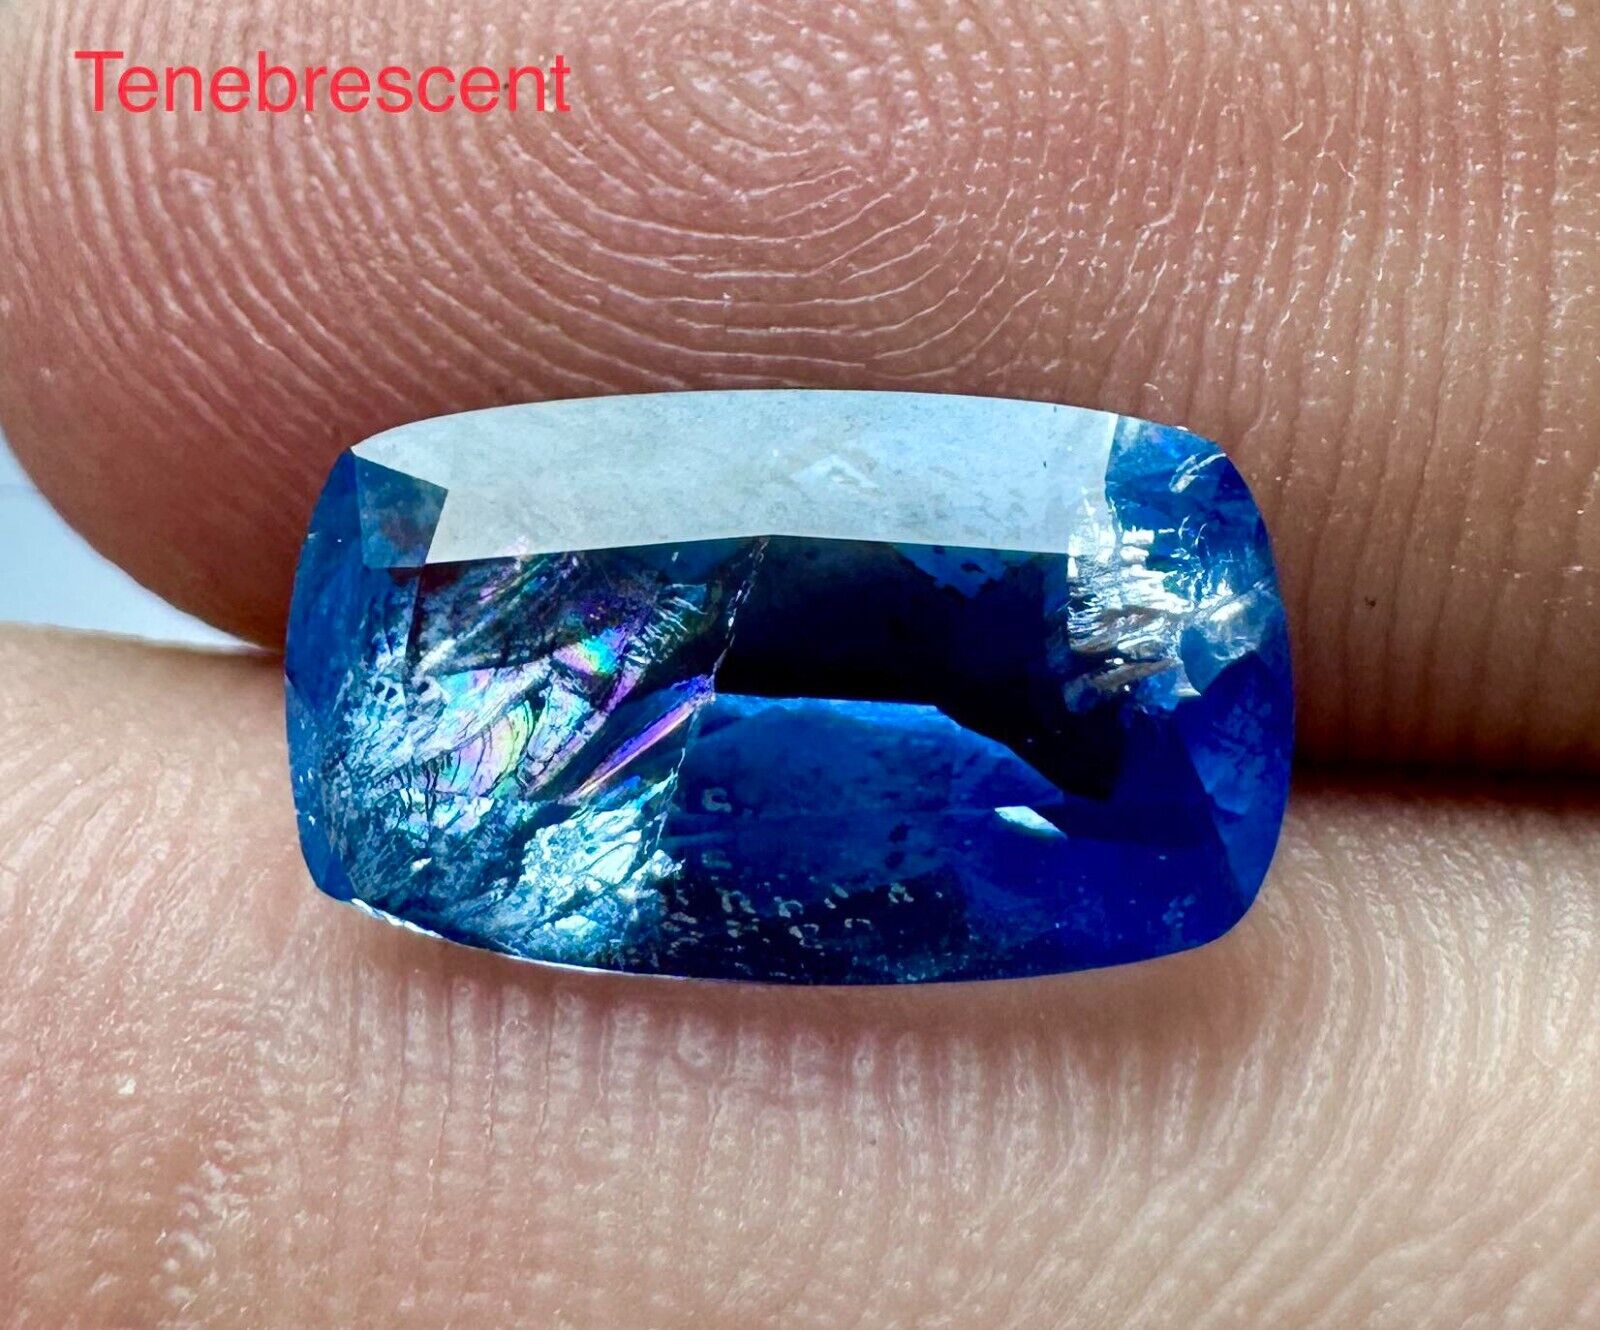 2.10 Carat Fluorescent Sharp Tenebrescent Scapolite Rare Cut Gemstone From @Afg